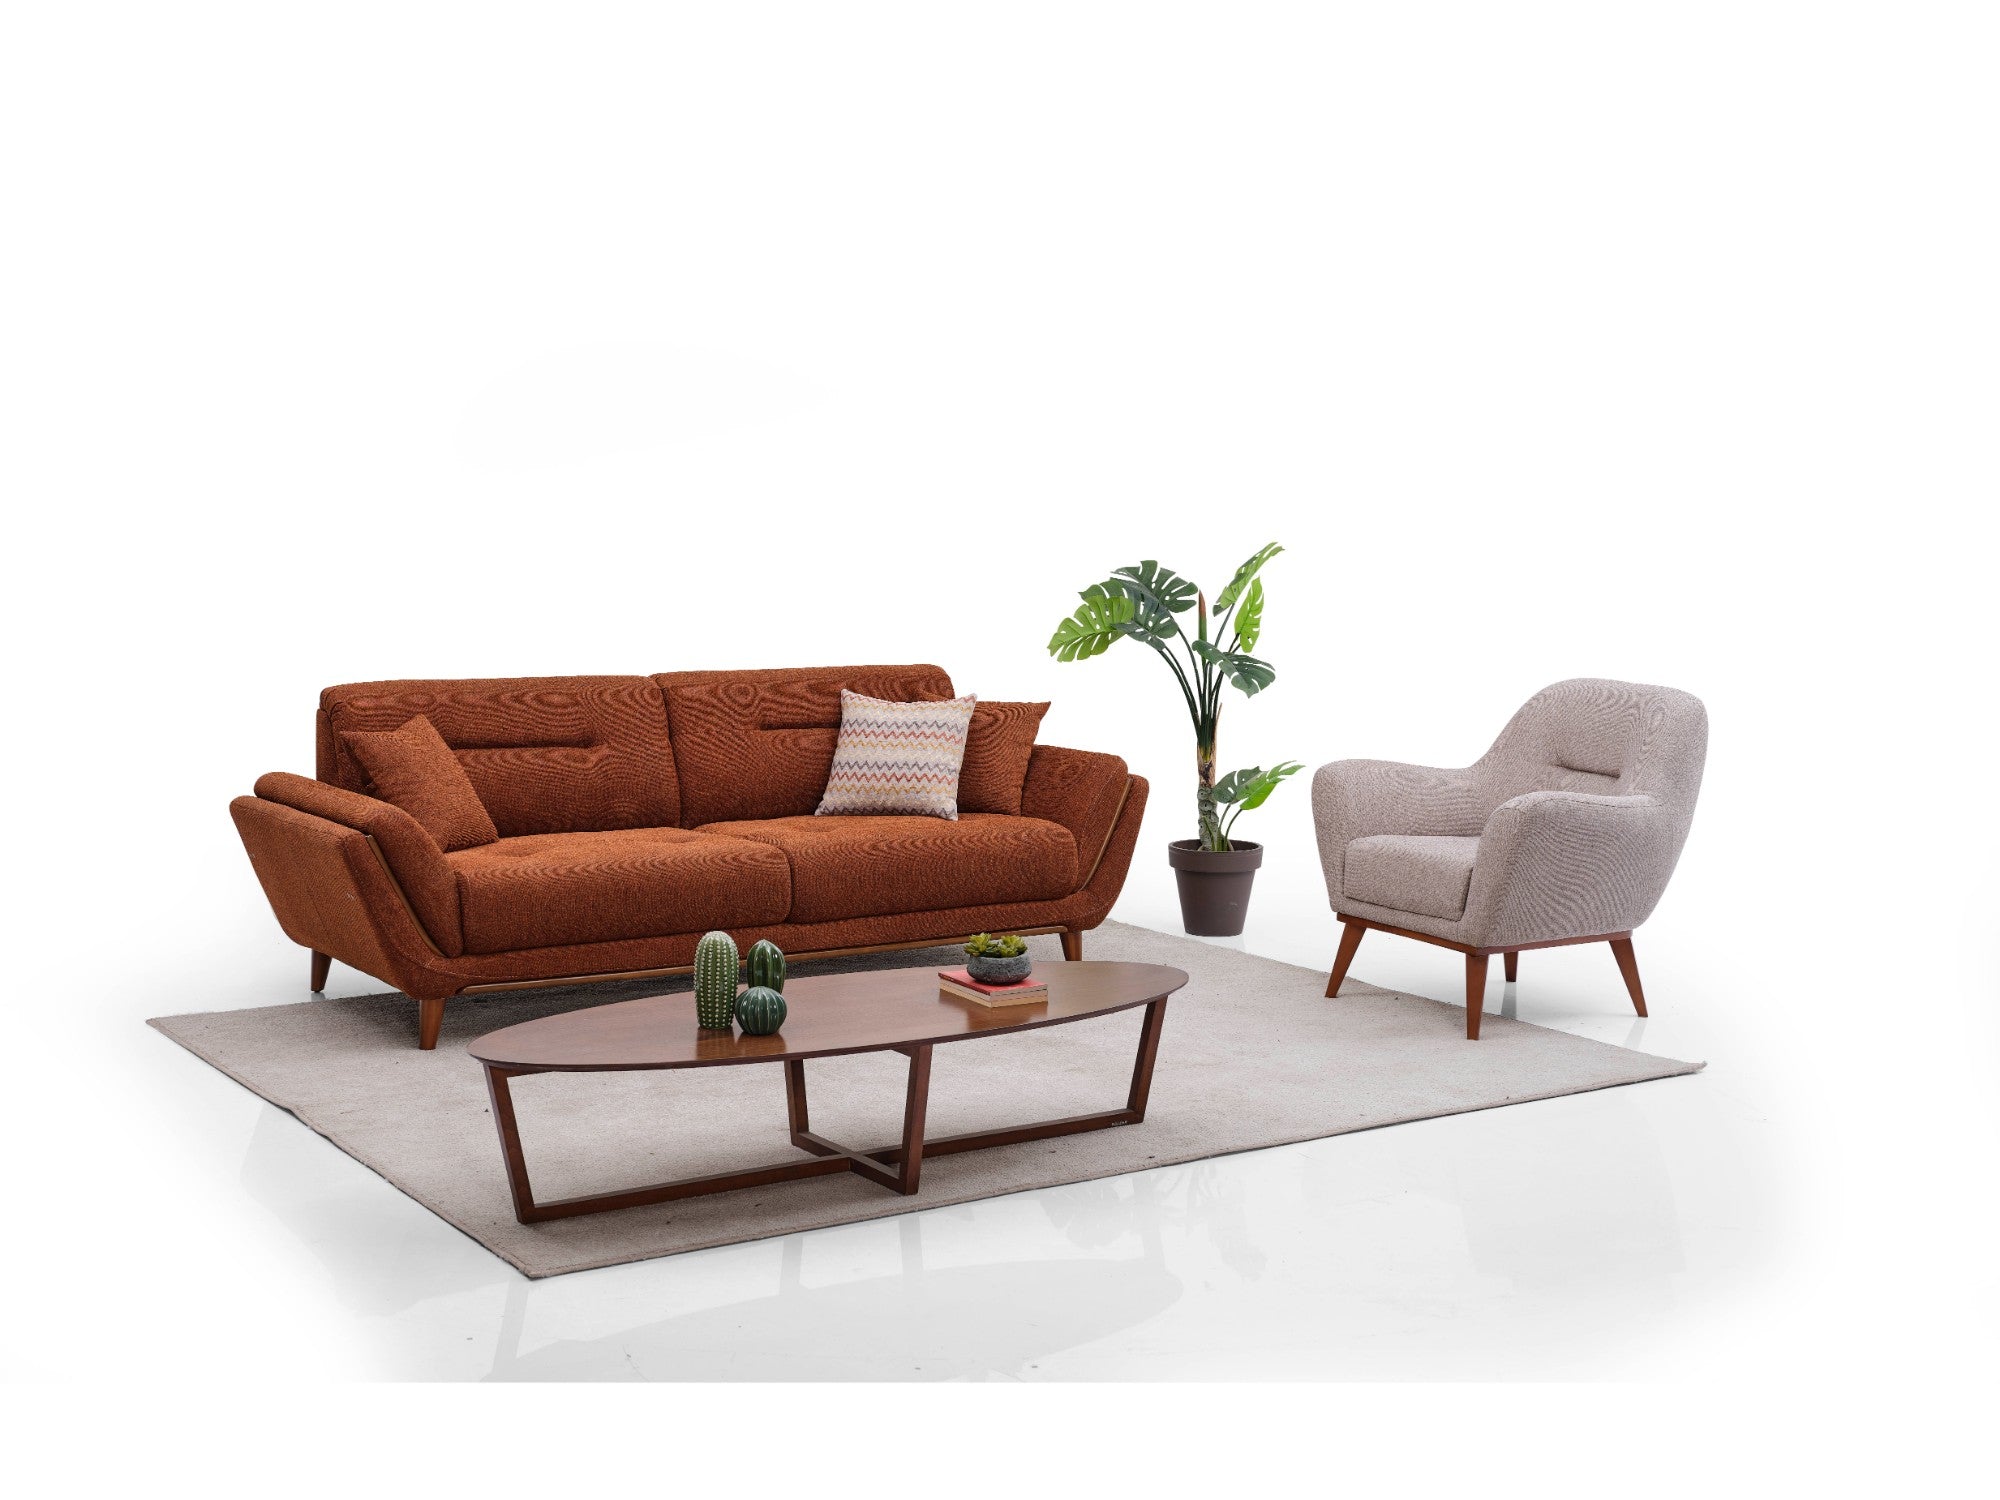 Paris Convertible Livingroom Set (2 Sofa & 2 Chair)